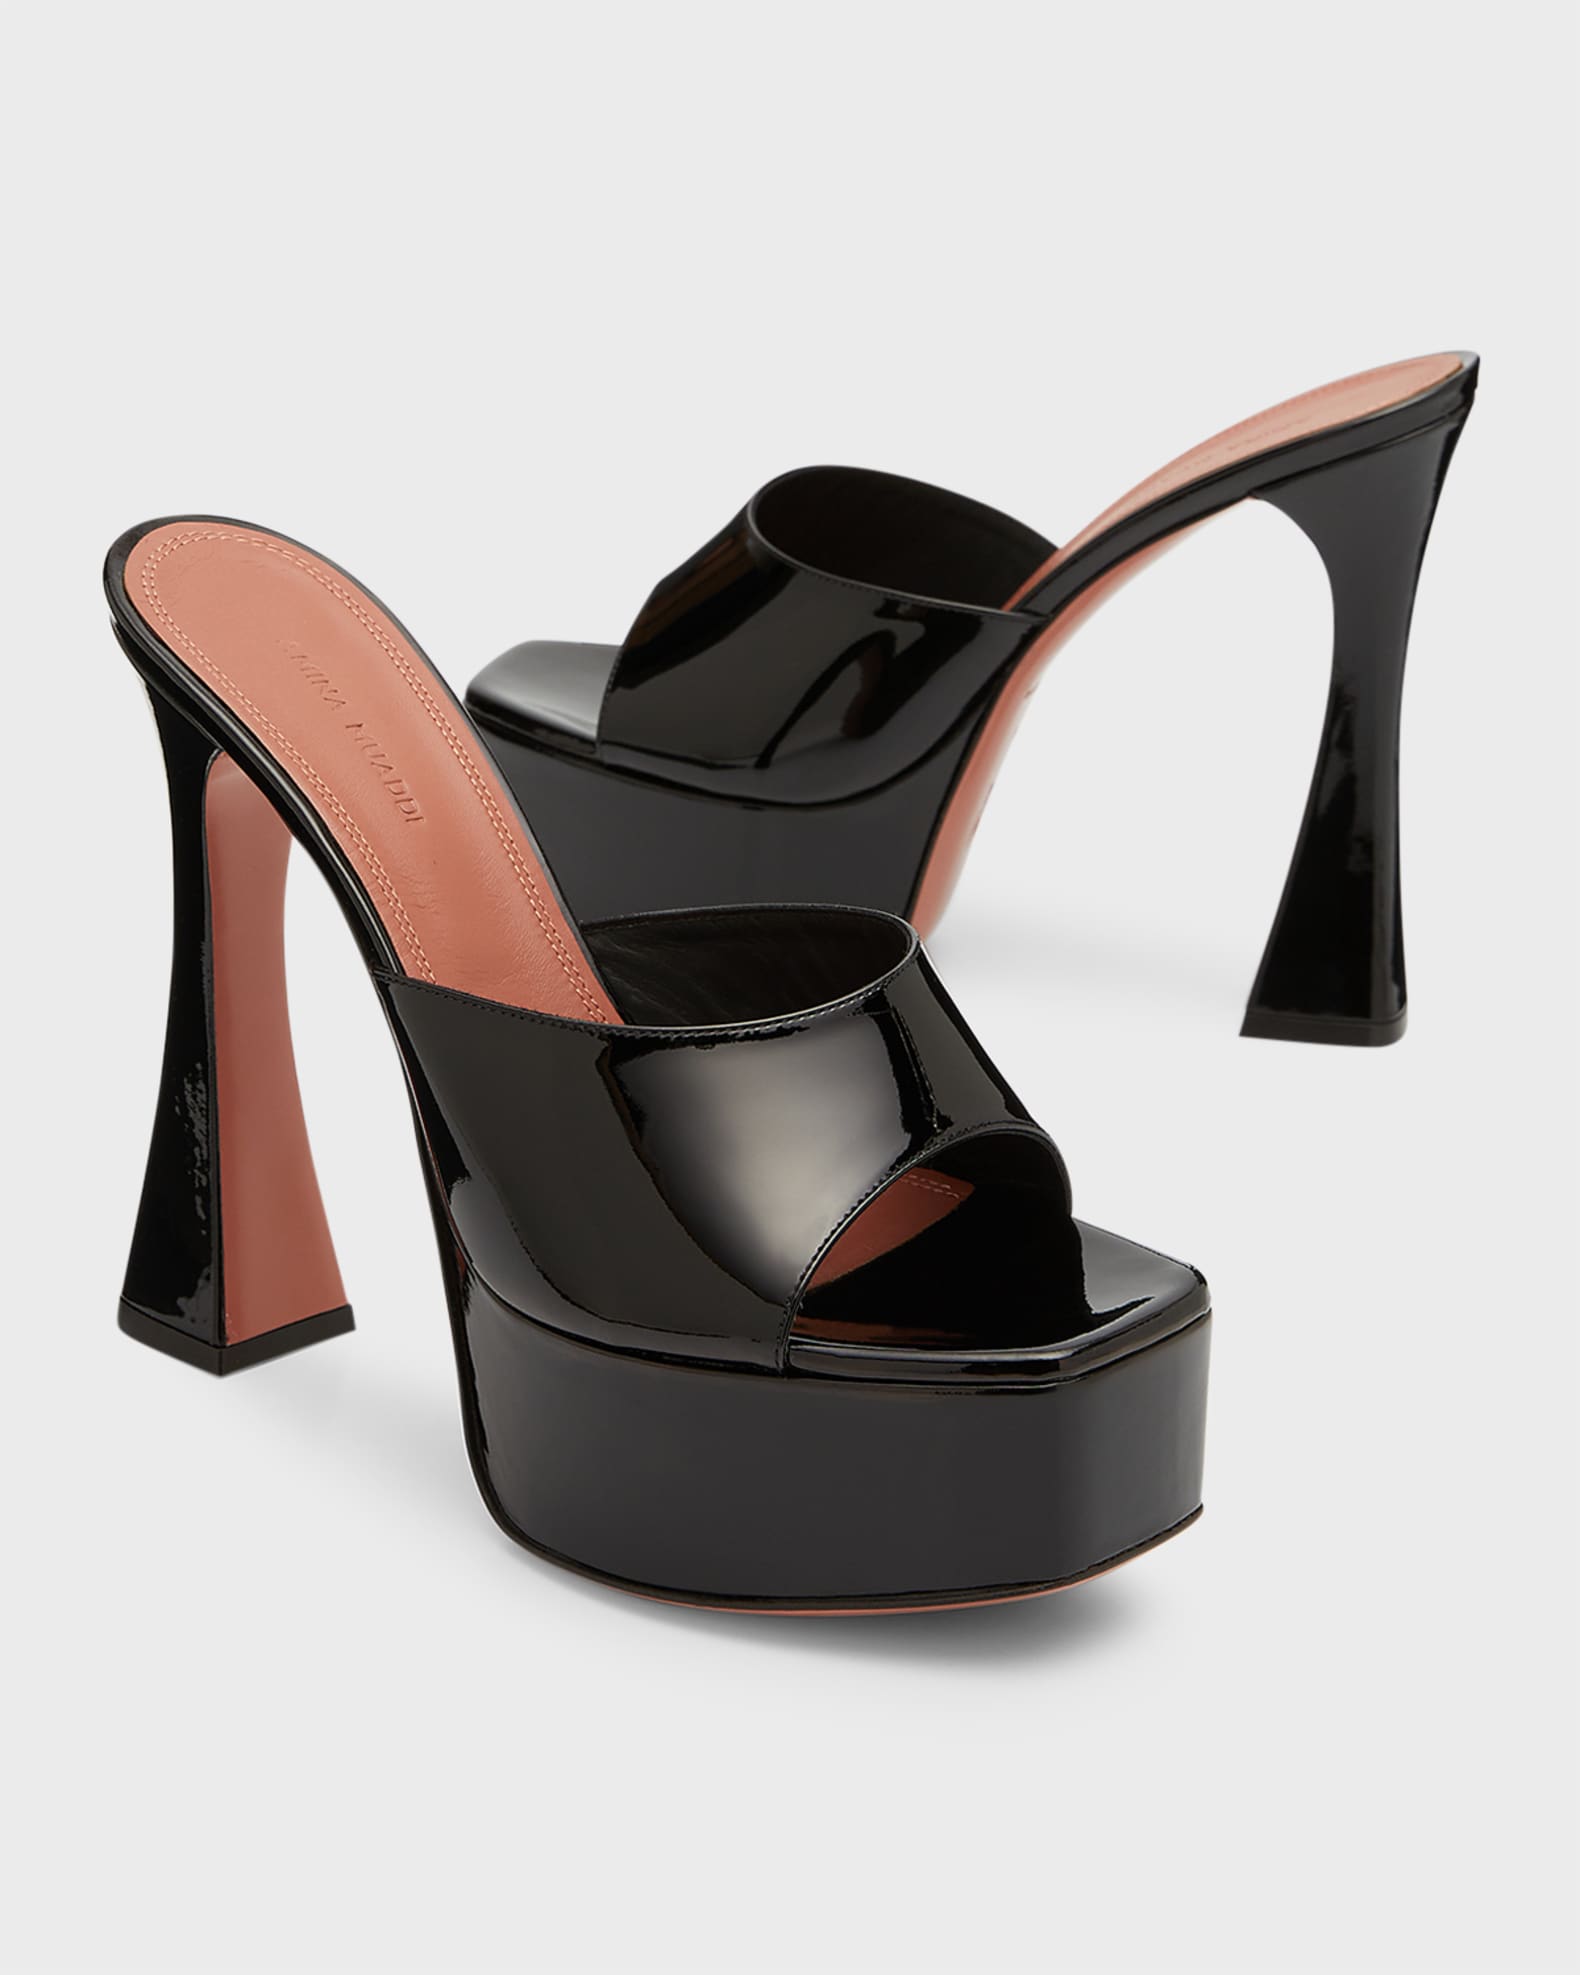 Amina Muaddi Dalida Patent Platform Mule Sandals | Neiman Marcus